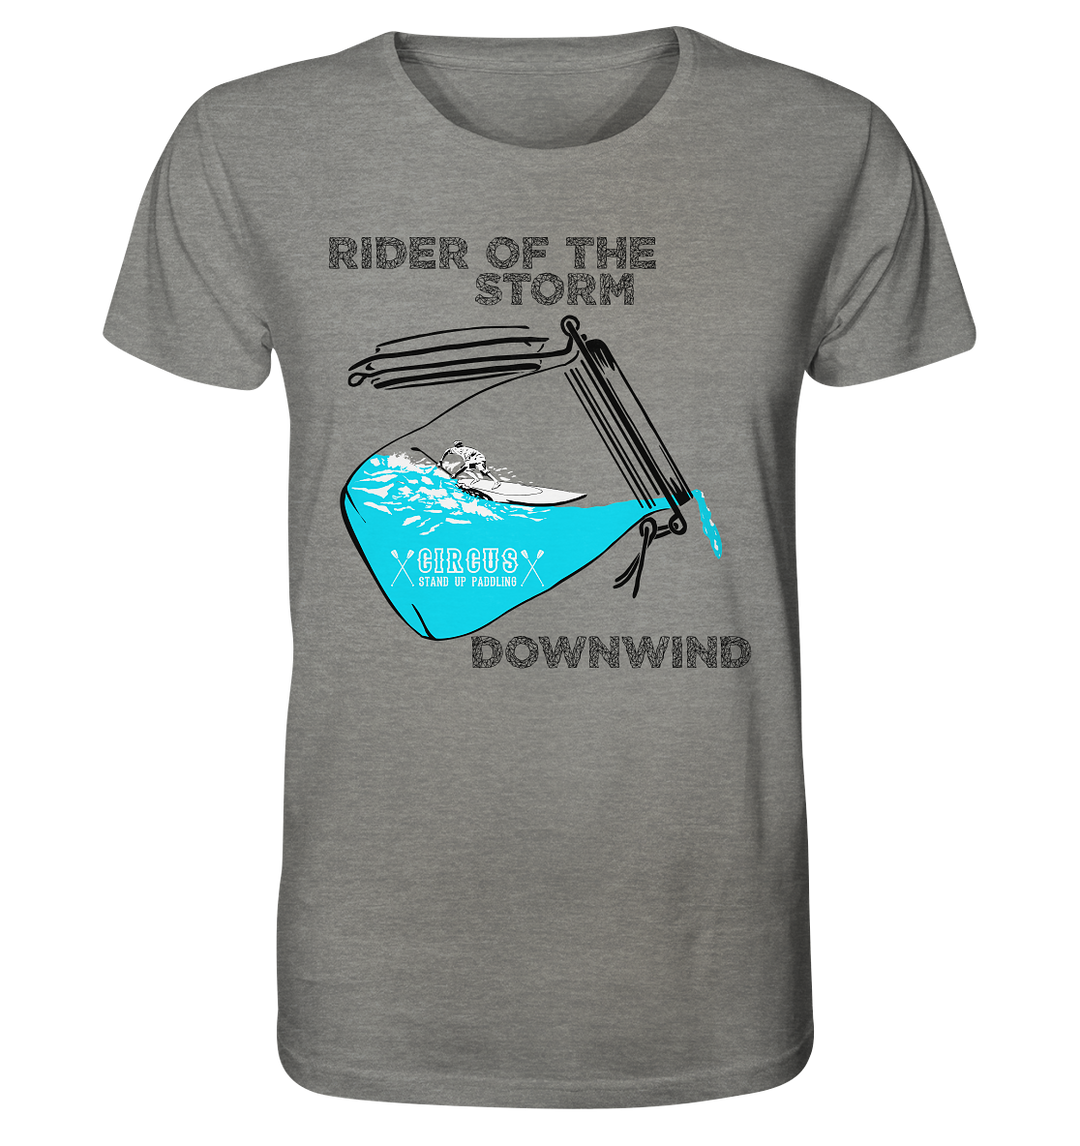 Let's go Downwind - Herren Organic Shirt (meliert)